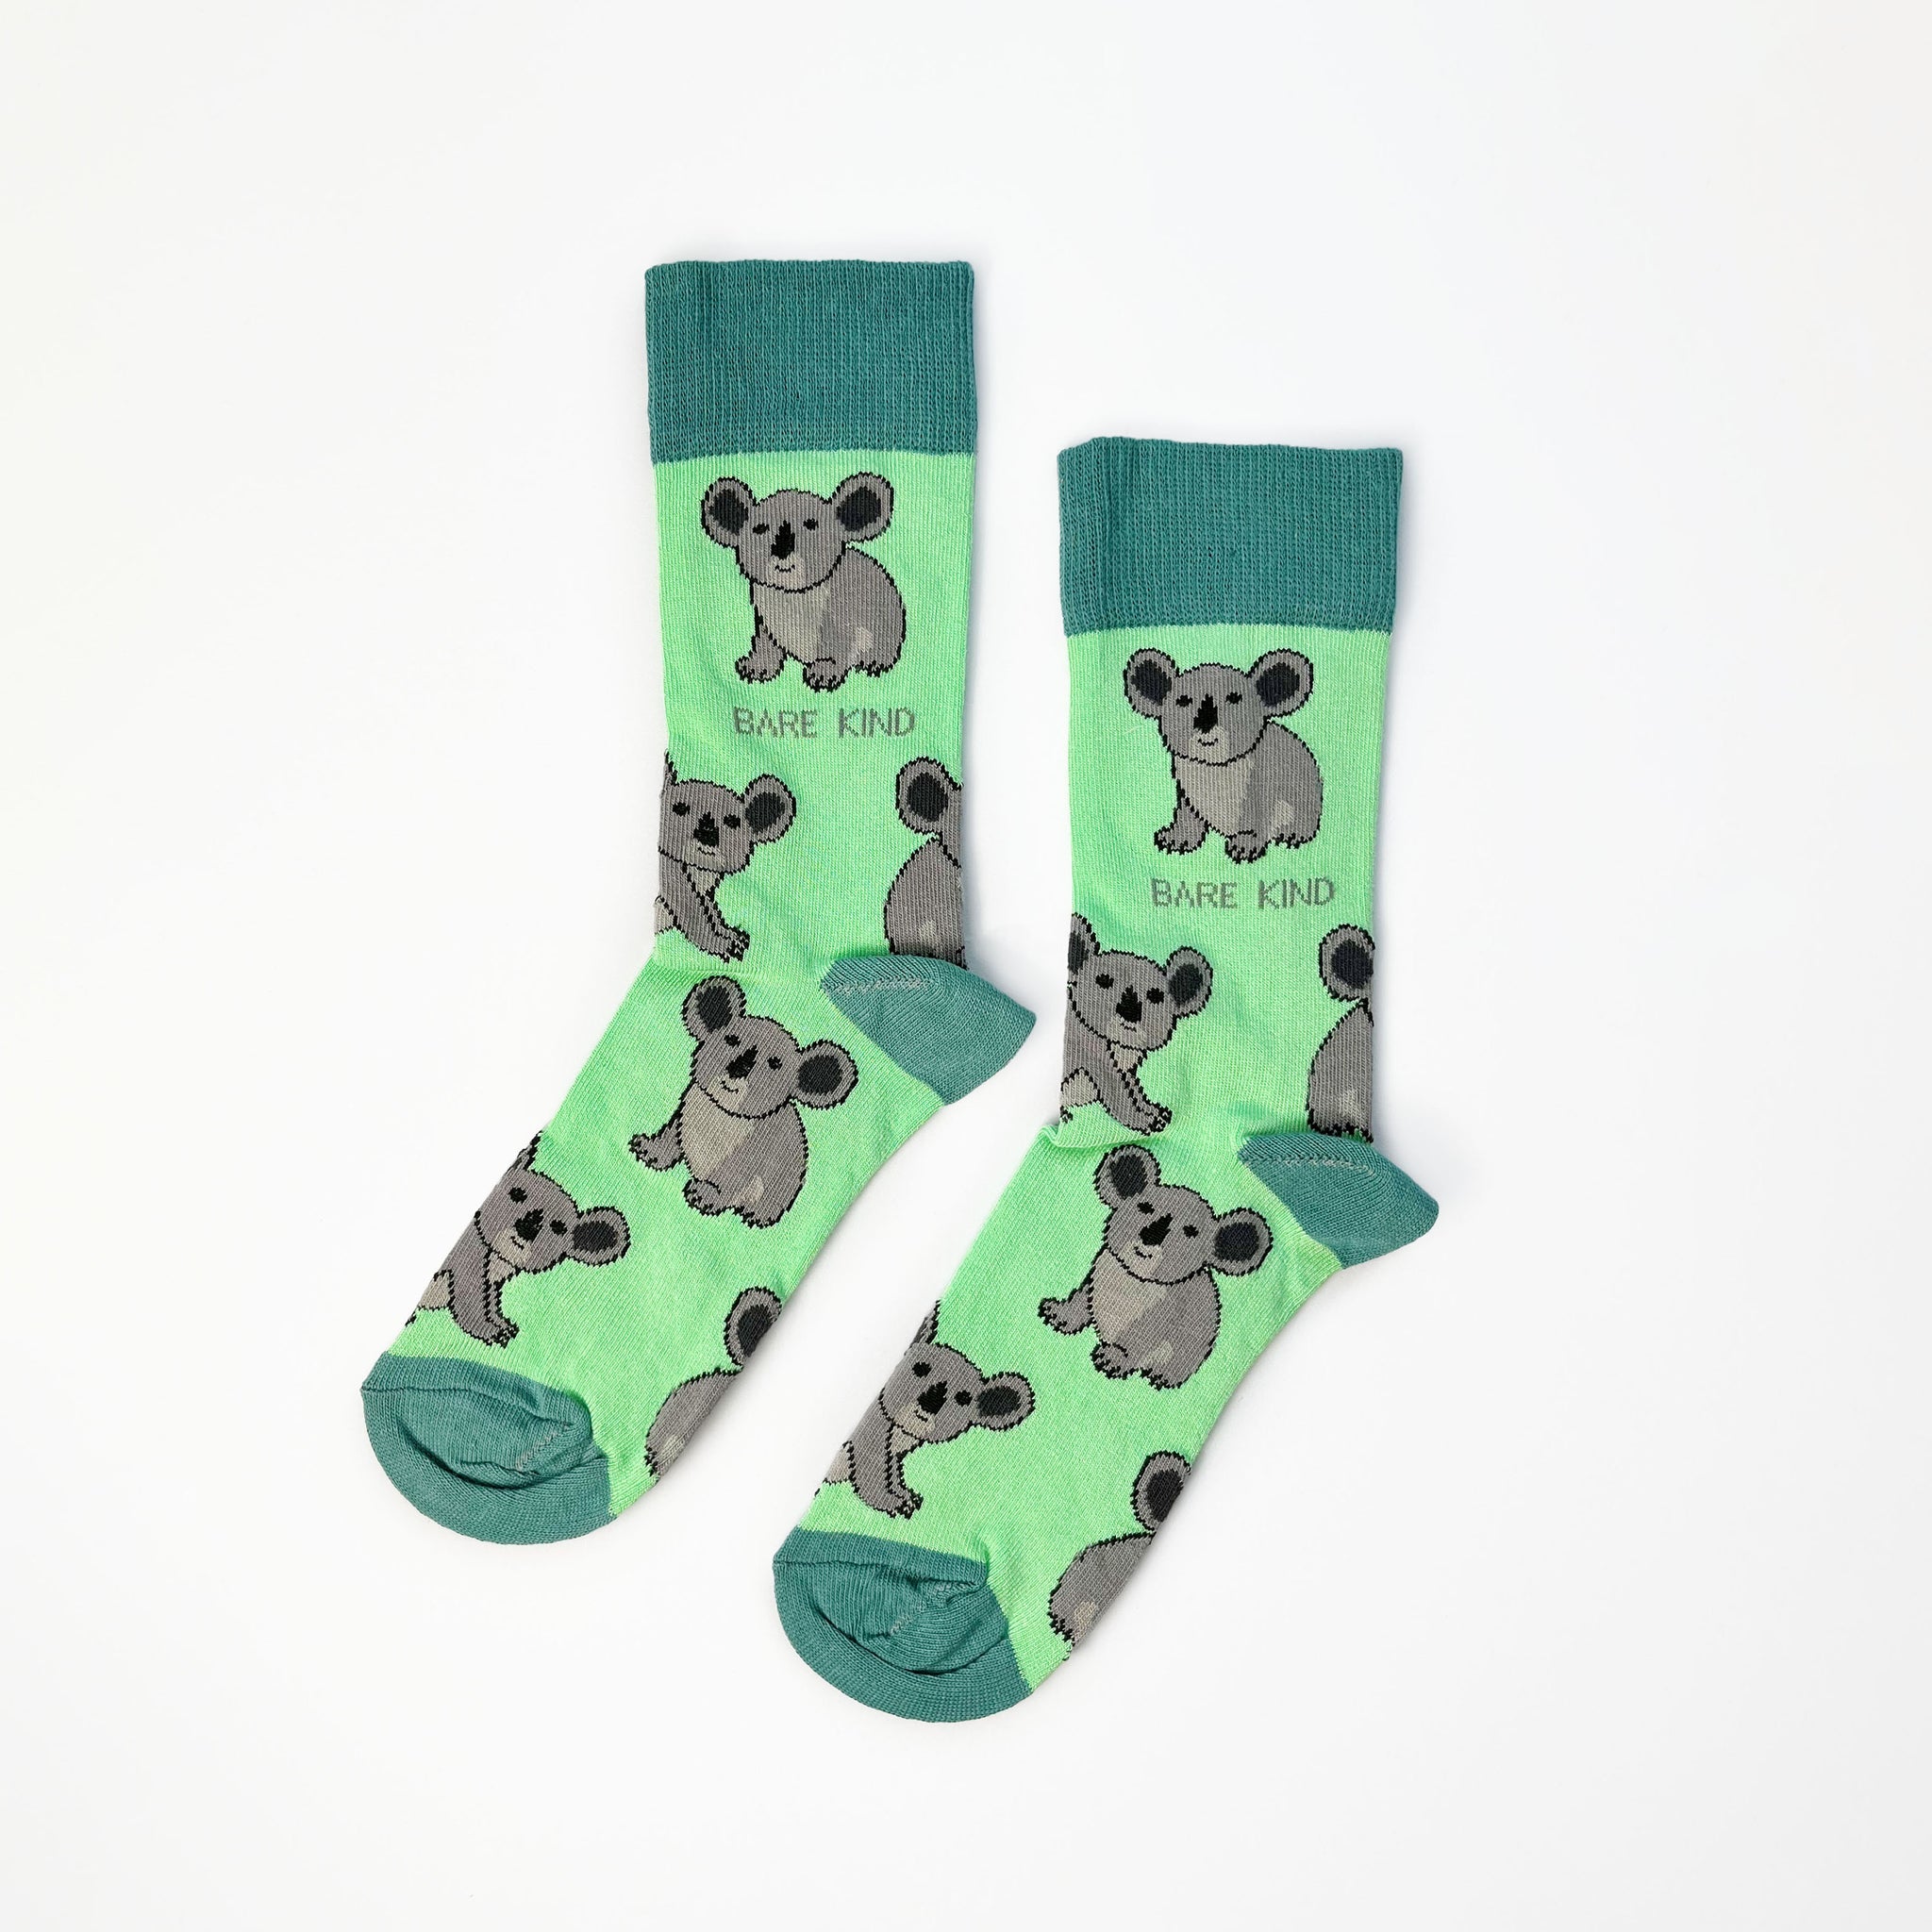 Bare Kind Bamboo Socks - Adult - Koalas